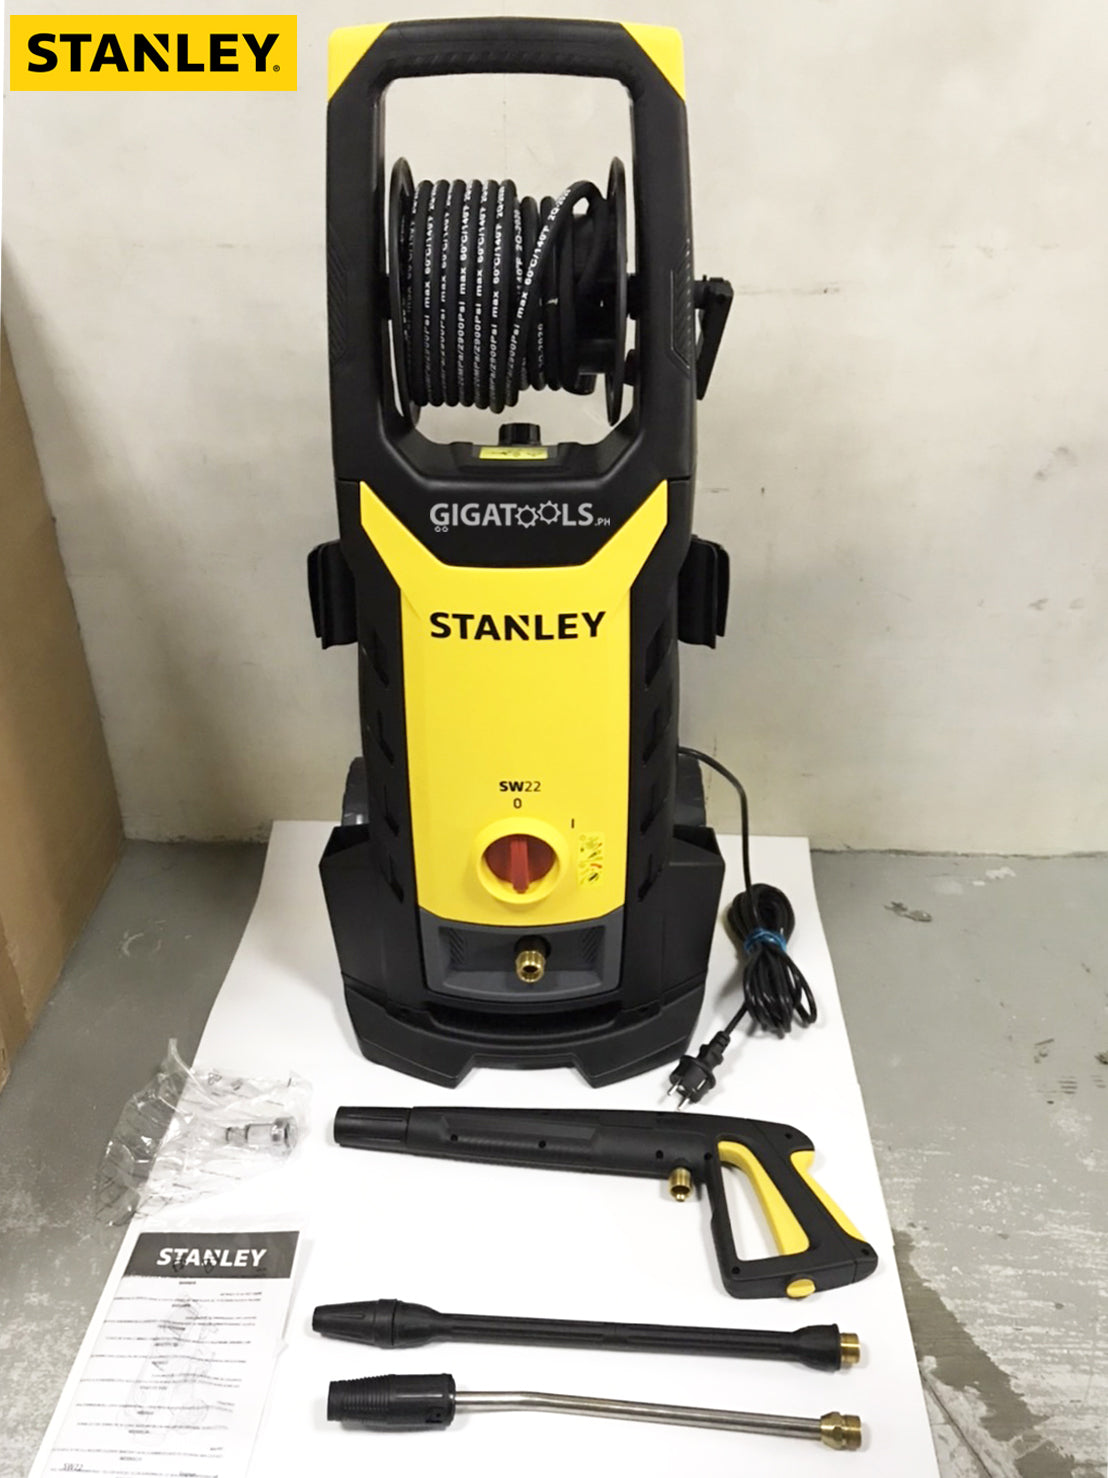 Stanley SW22 145 Bar High Pressure Washer & Car Wash Set, Induction Motor (Brushless)